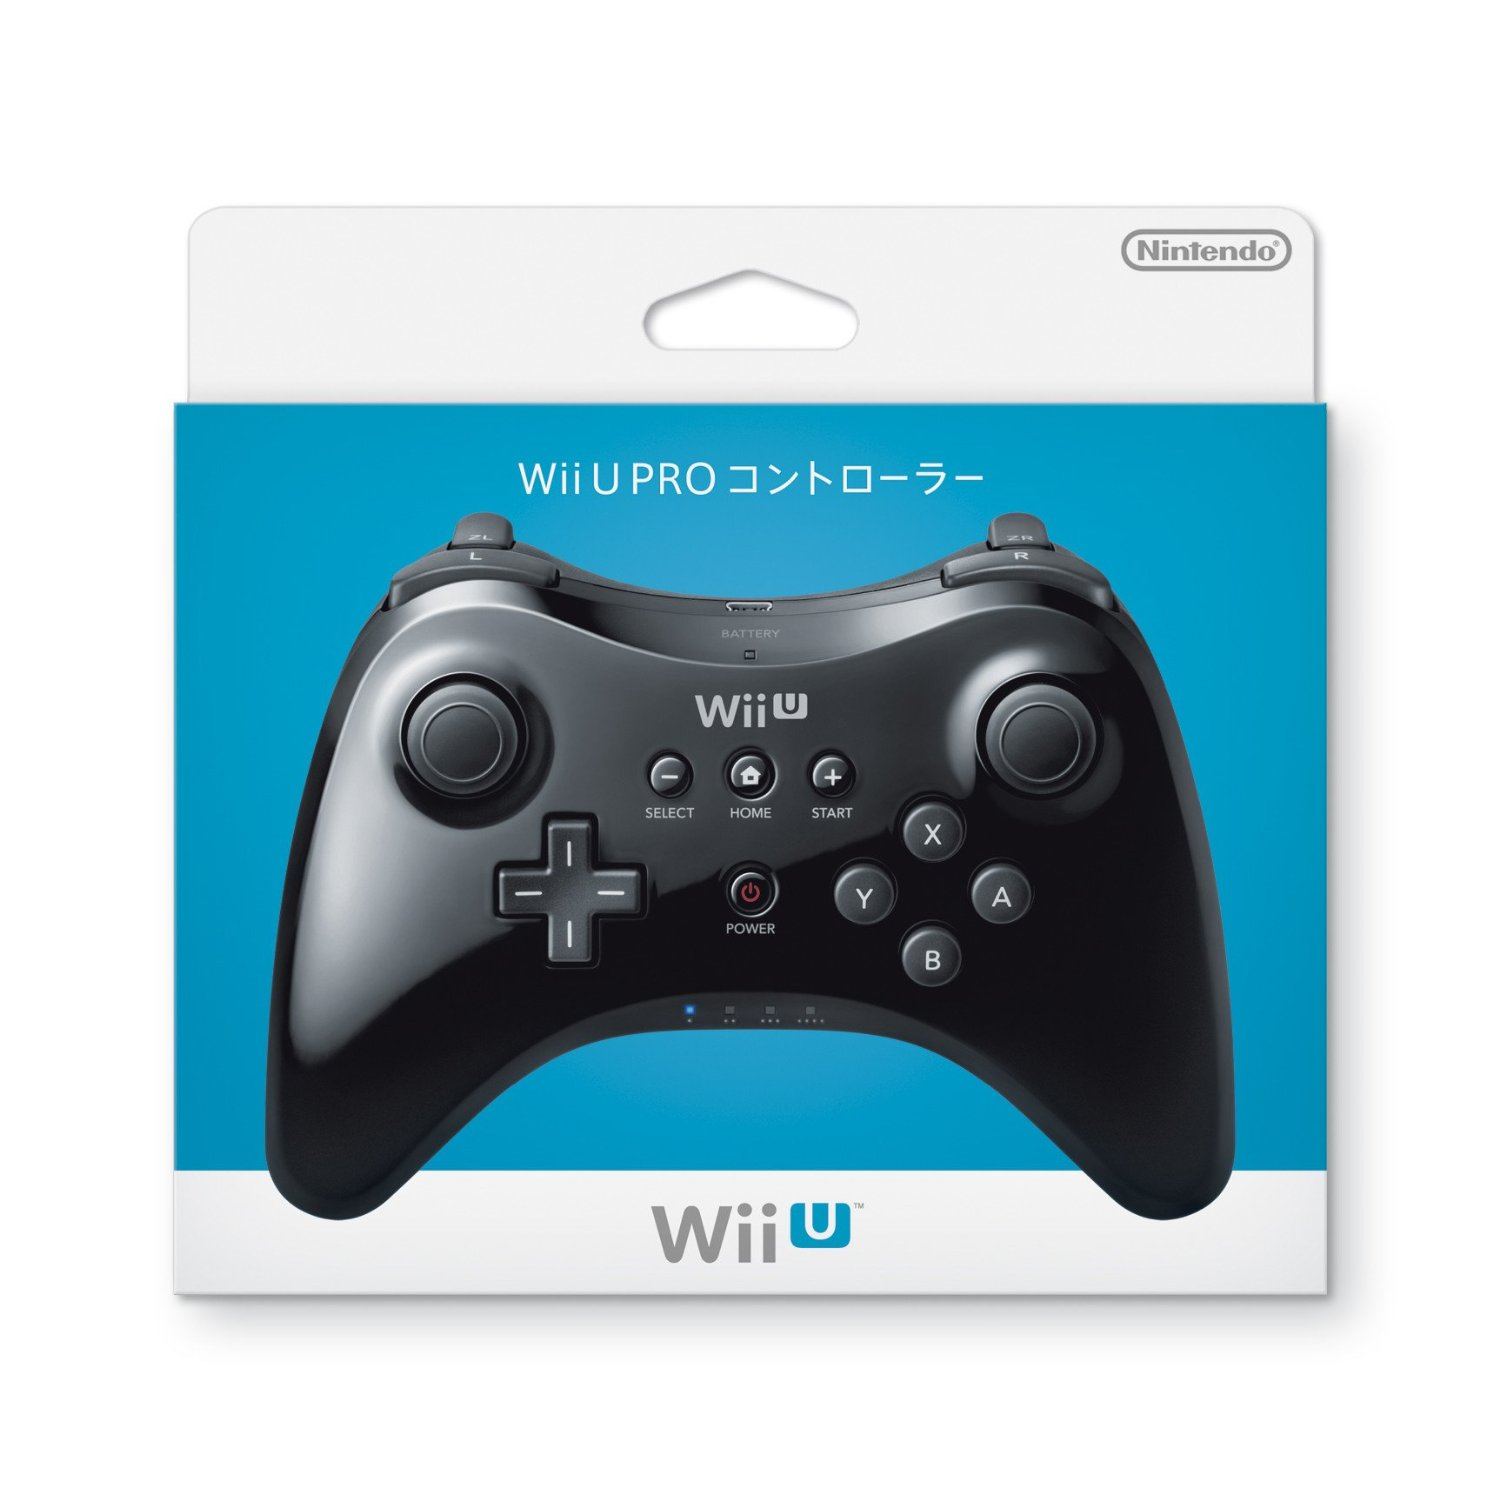 Nintendo Wii U Pro Controller (Black) for Wii U